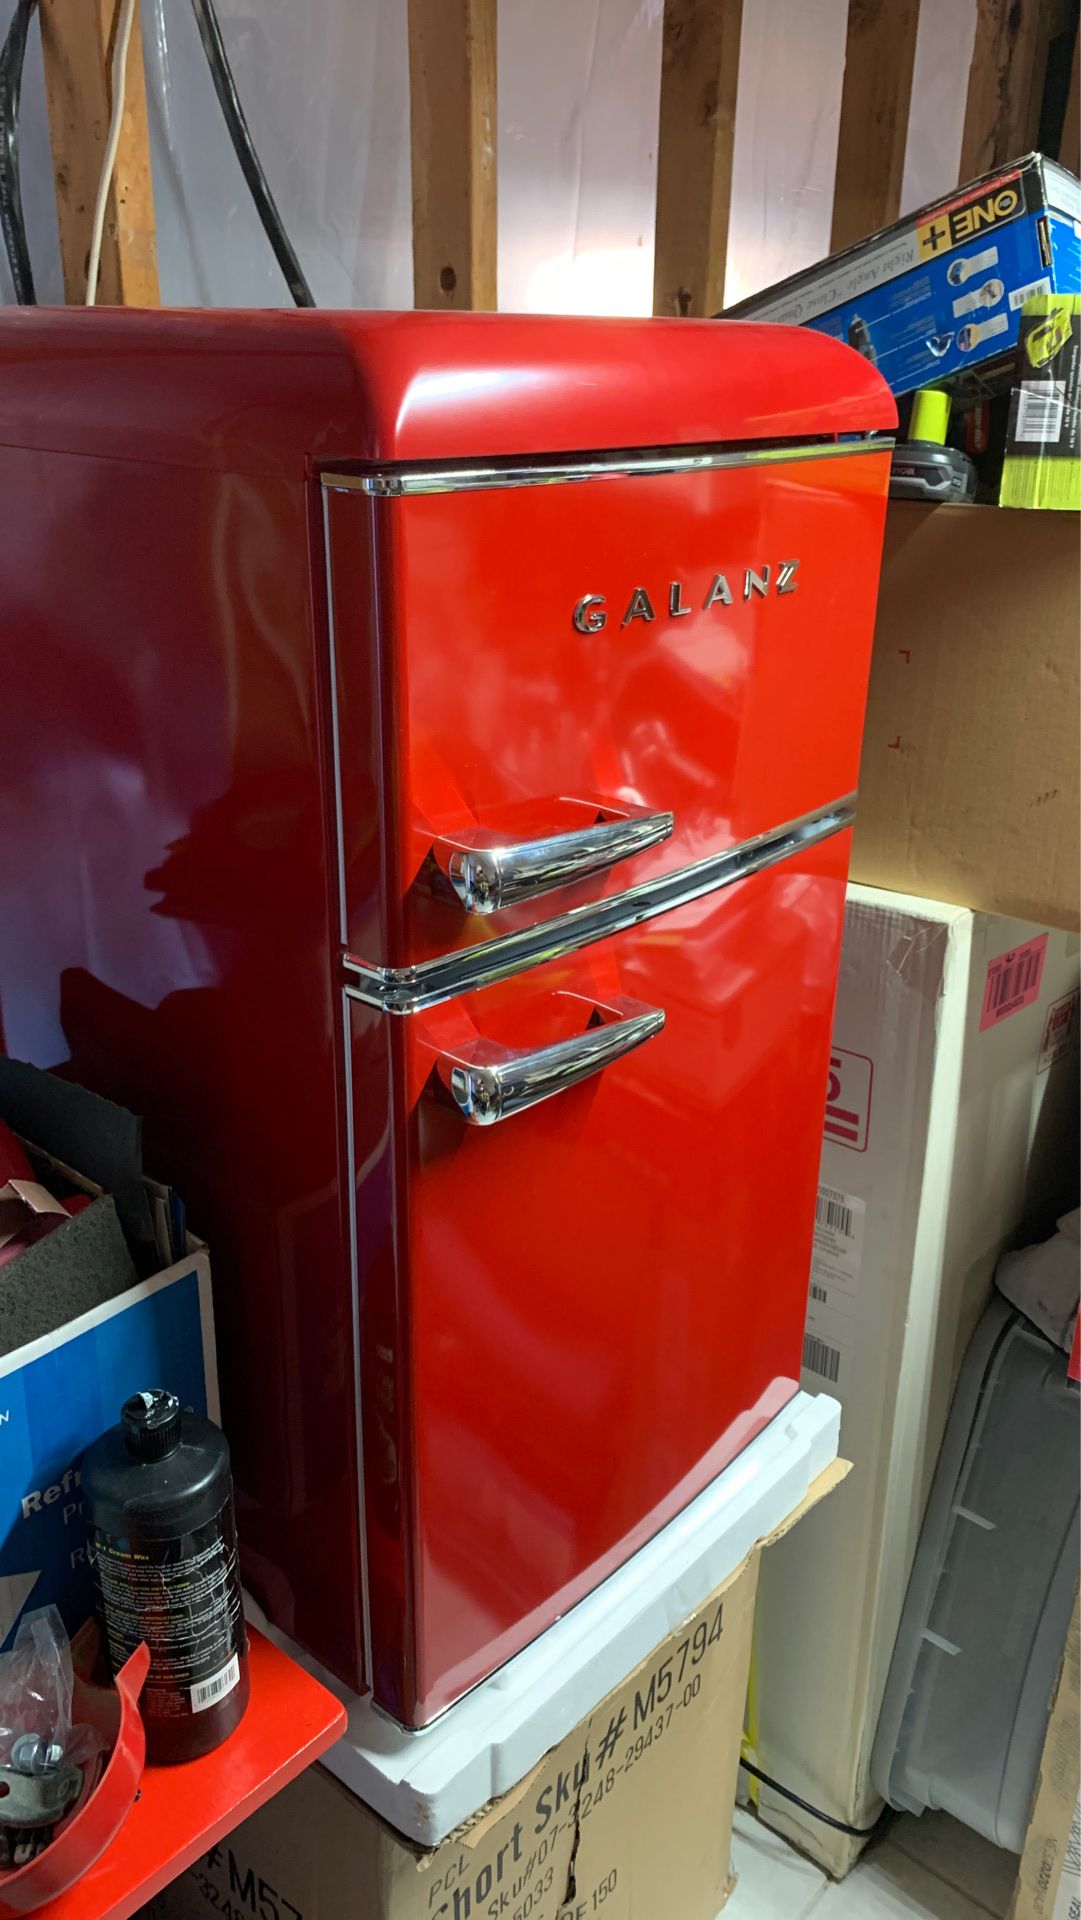 Galanz Retro-Style Fridge Refrigerator in Red Basically Brand-New!!!